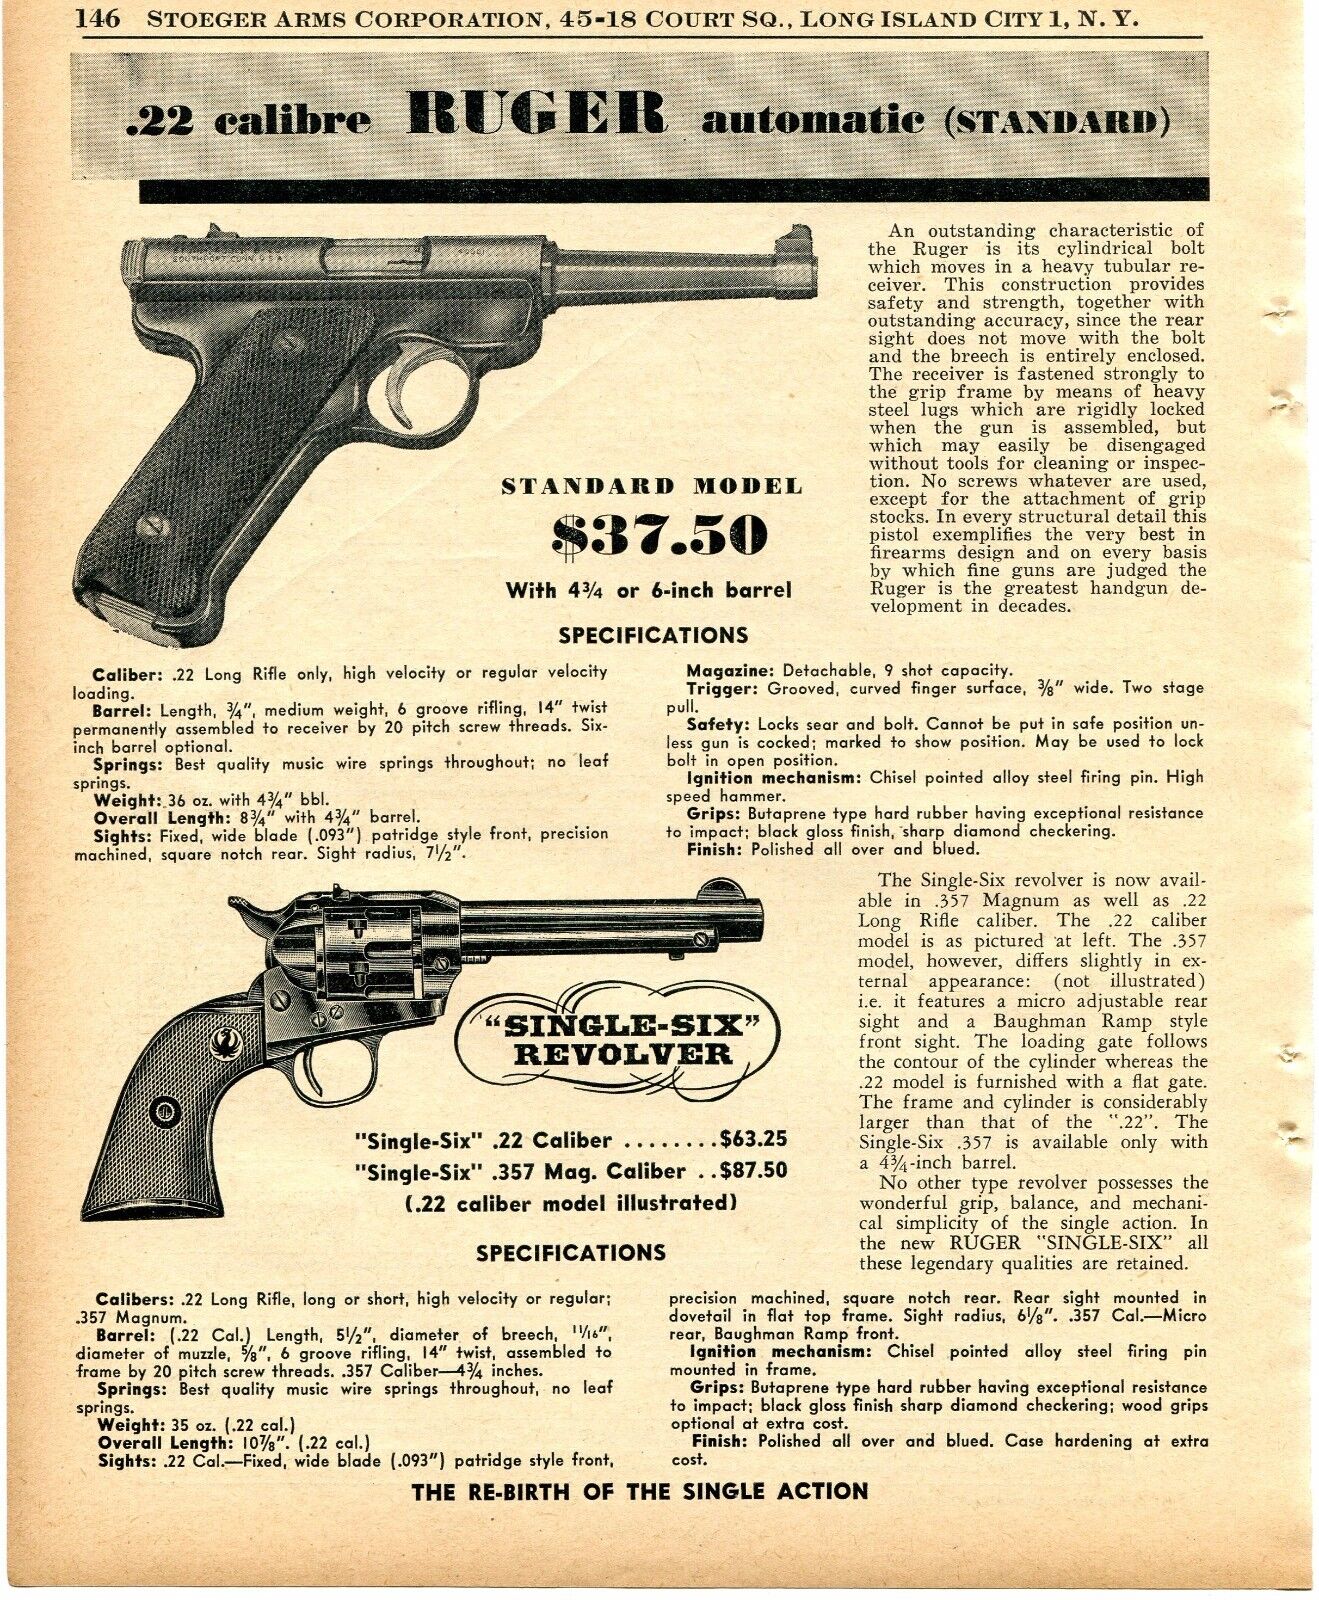 1956 Print Ad of Sturm Ruger Standard .22 Pistol & Single-Six Revolver